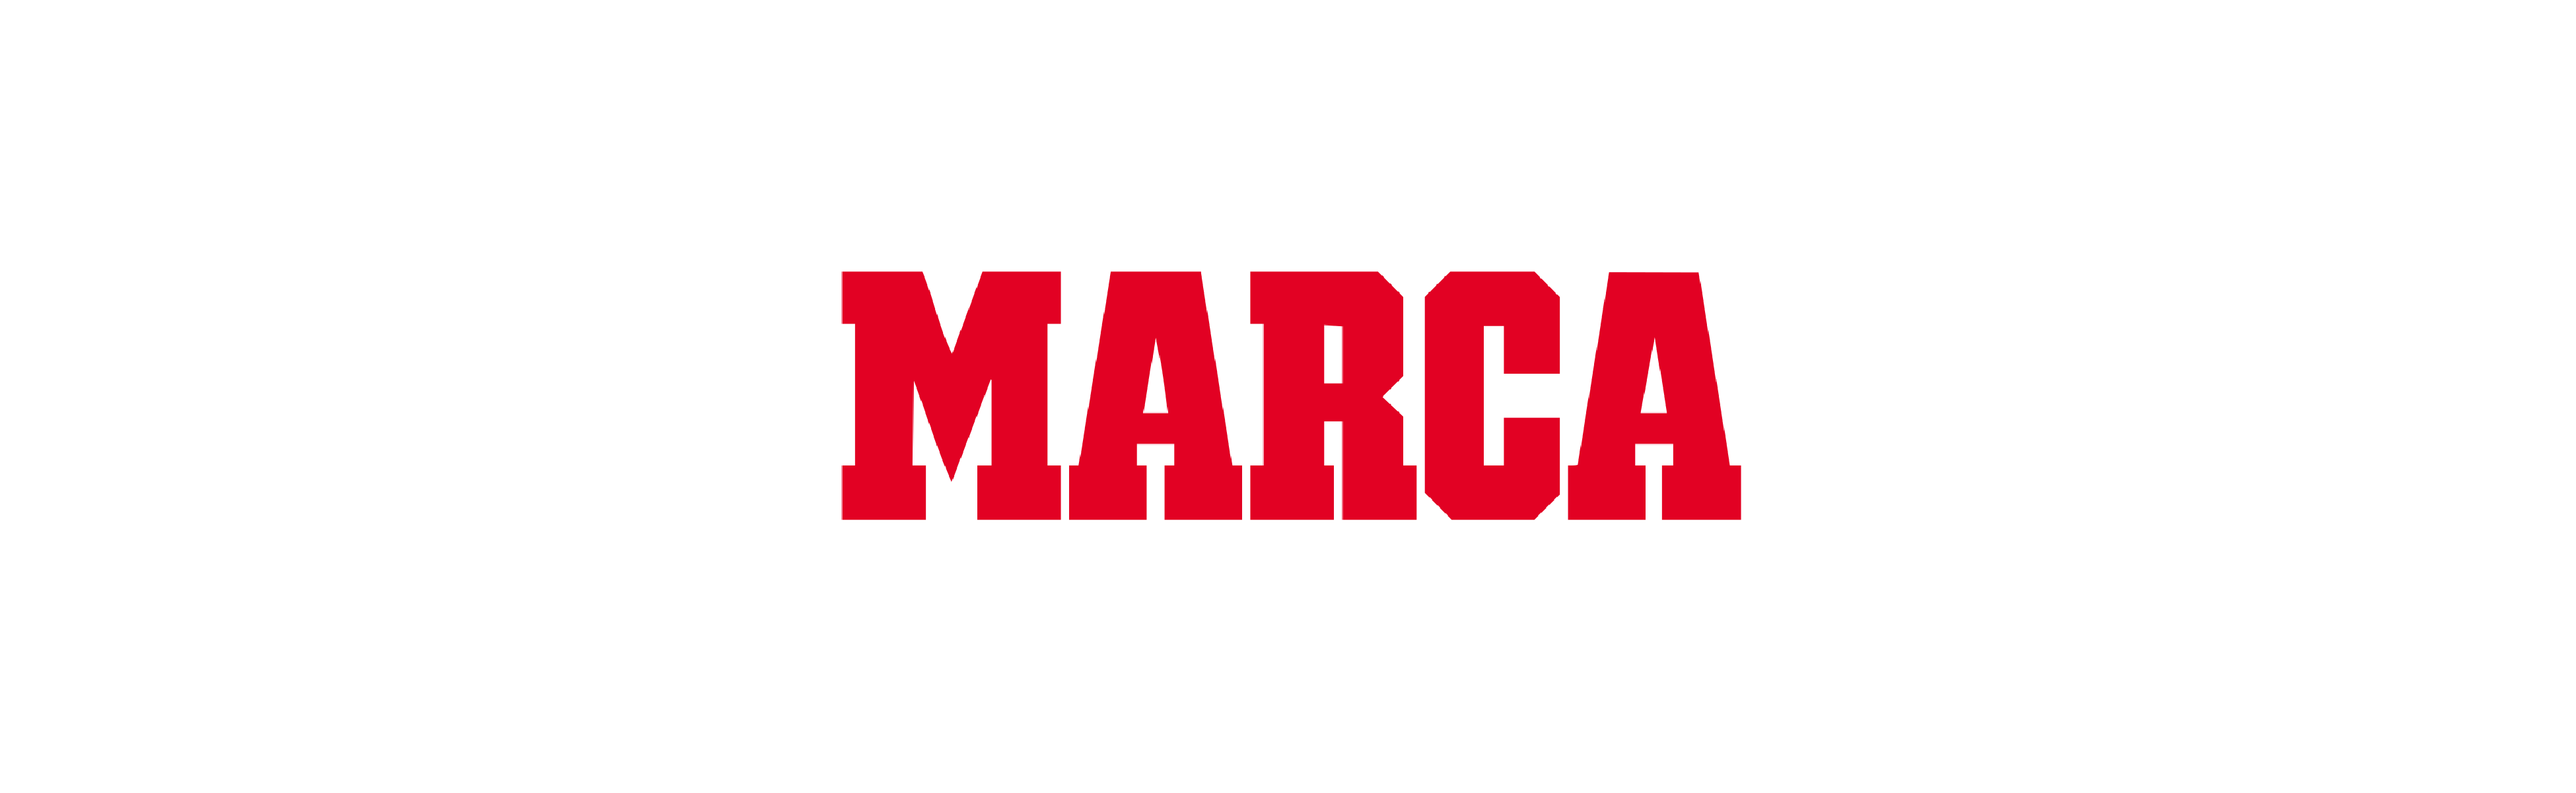 logo of marca